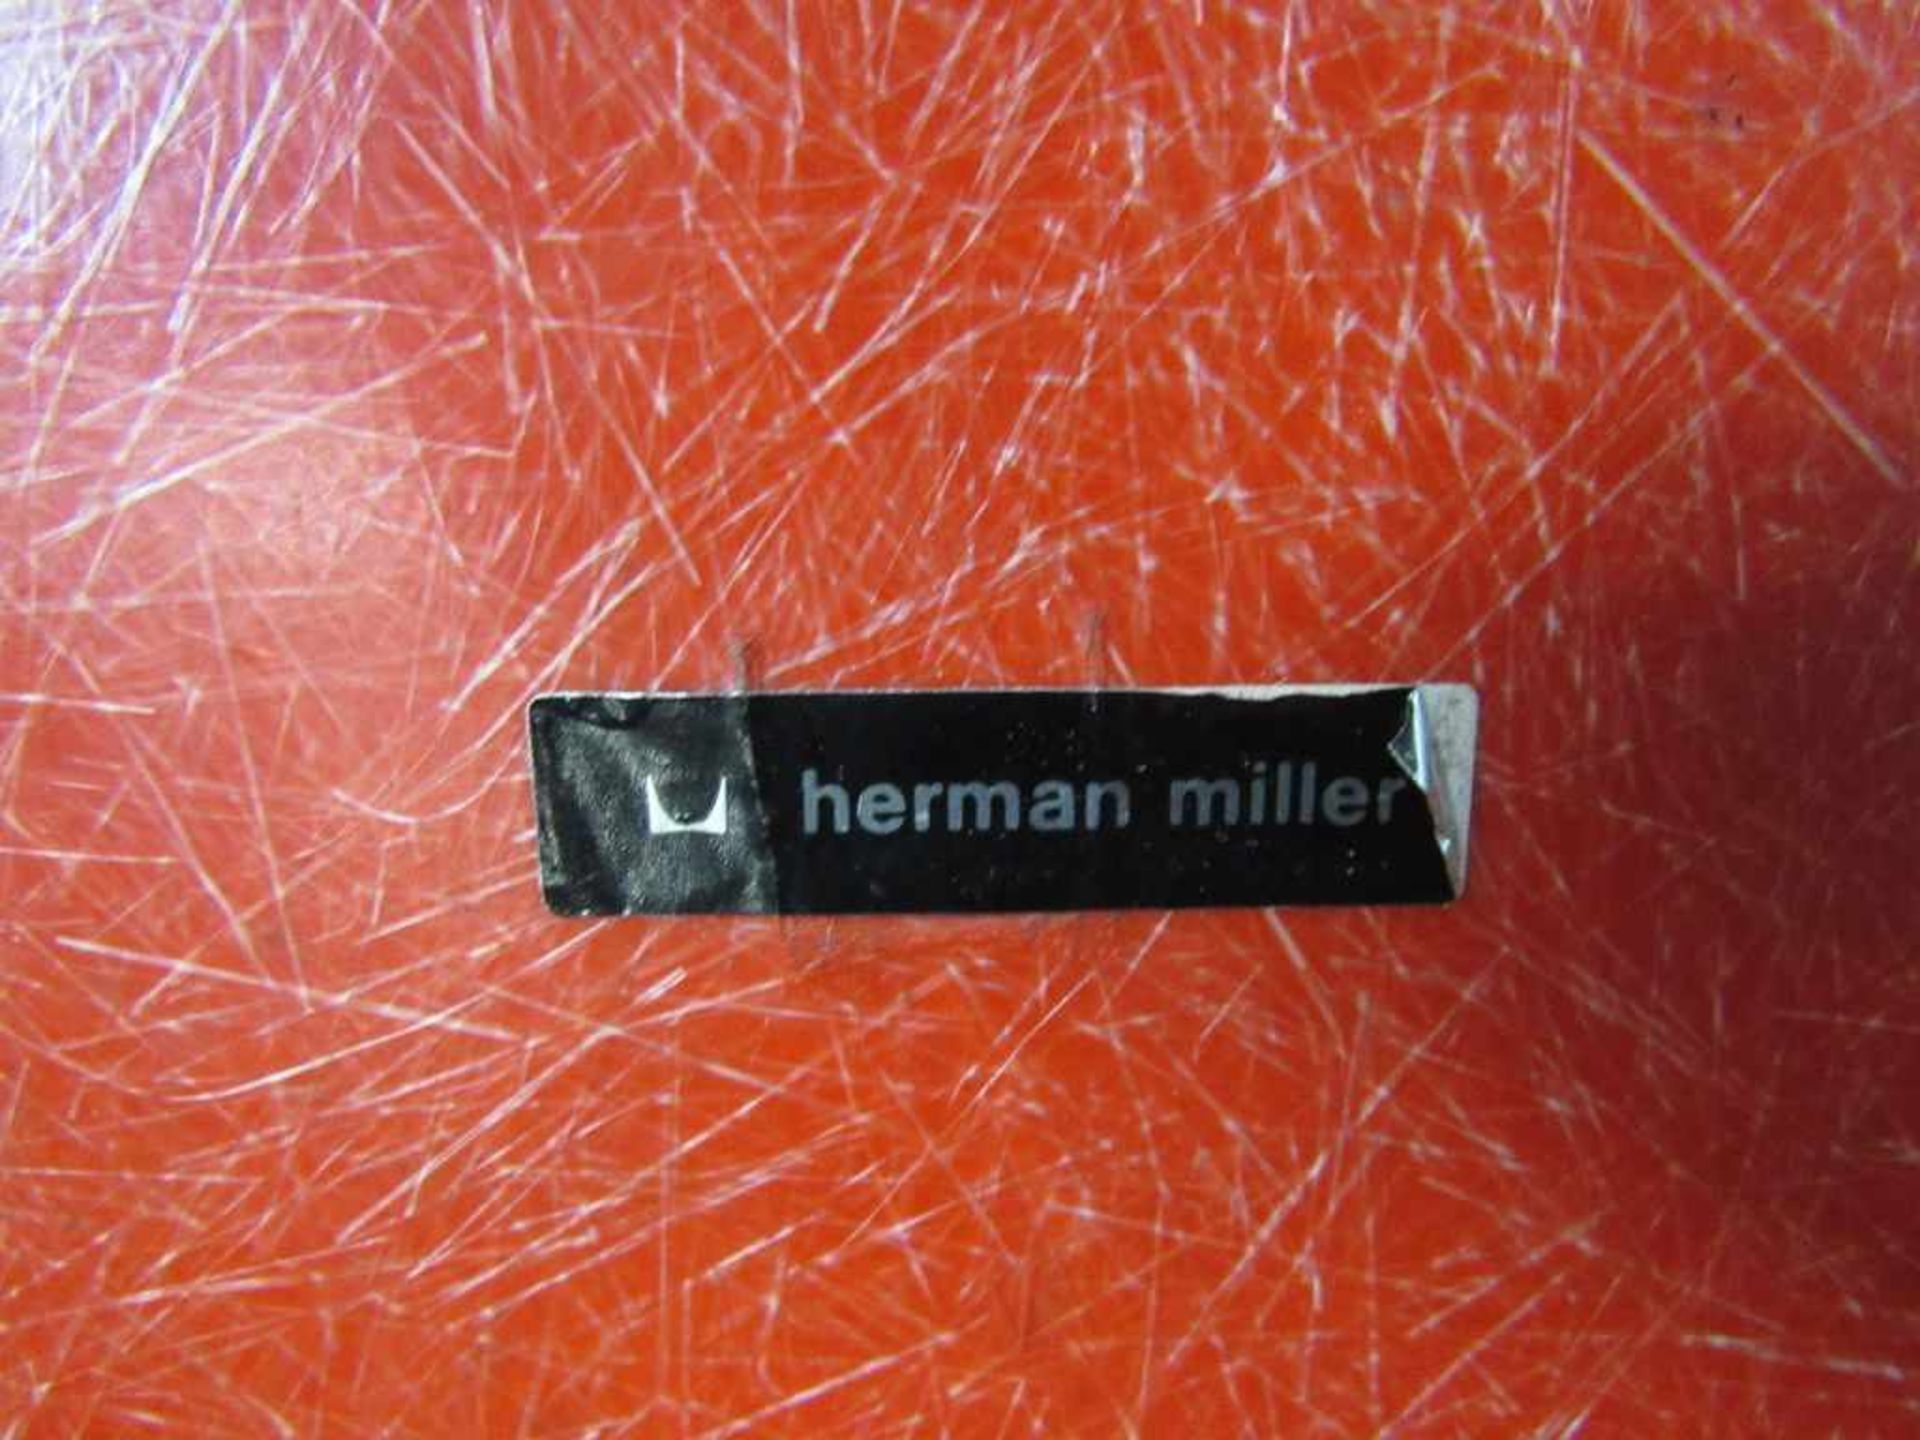 Stuhl Hermann Miller Space Age rote Fiberglasschale bezogen 60er Jahre Eams gelabelt auf La Fonda - Bild 5 aus 5